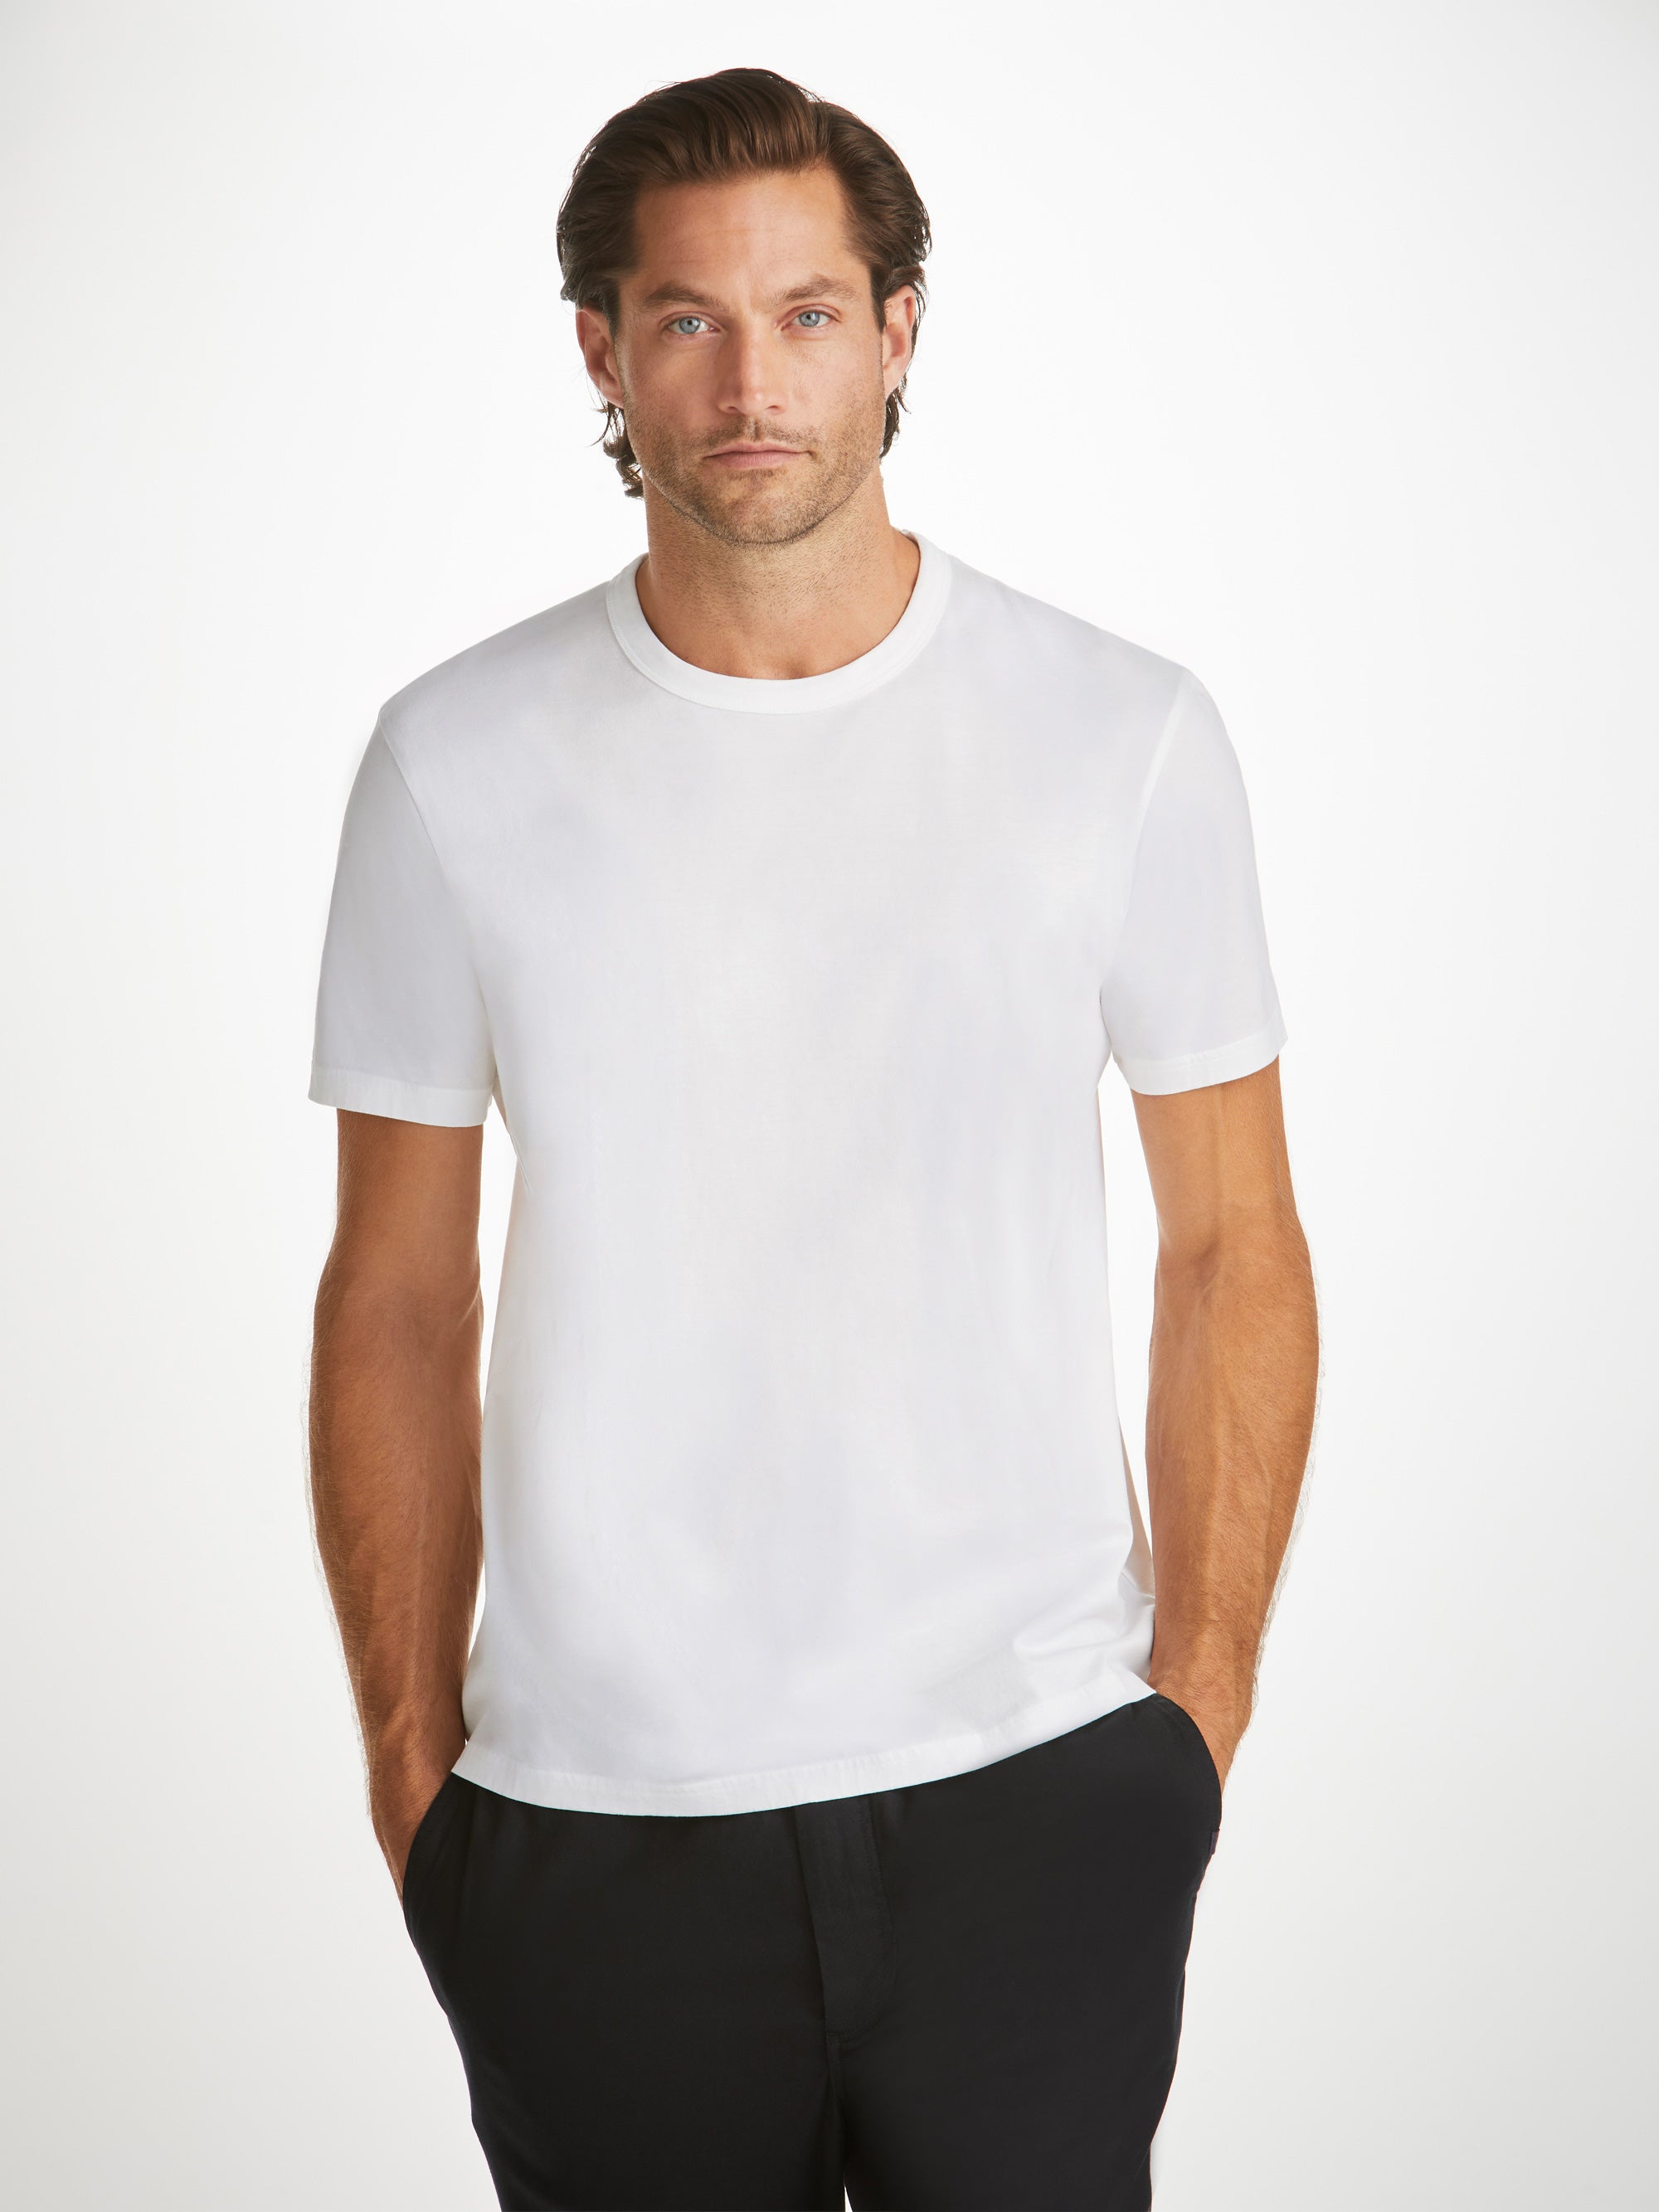 Men's T-Shirts  Egyptian Cotton T-shirts, Piques & Long Sleeves